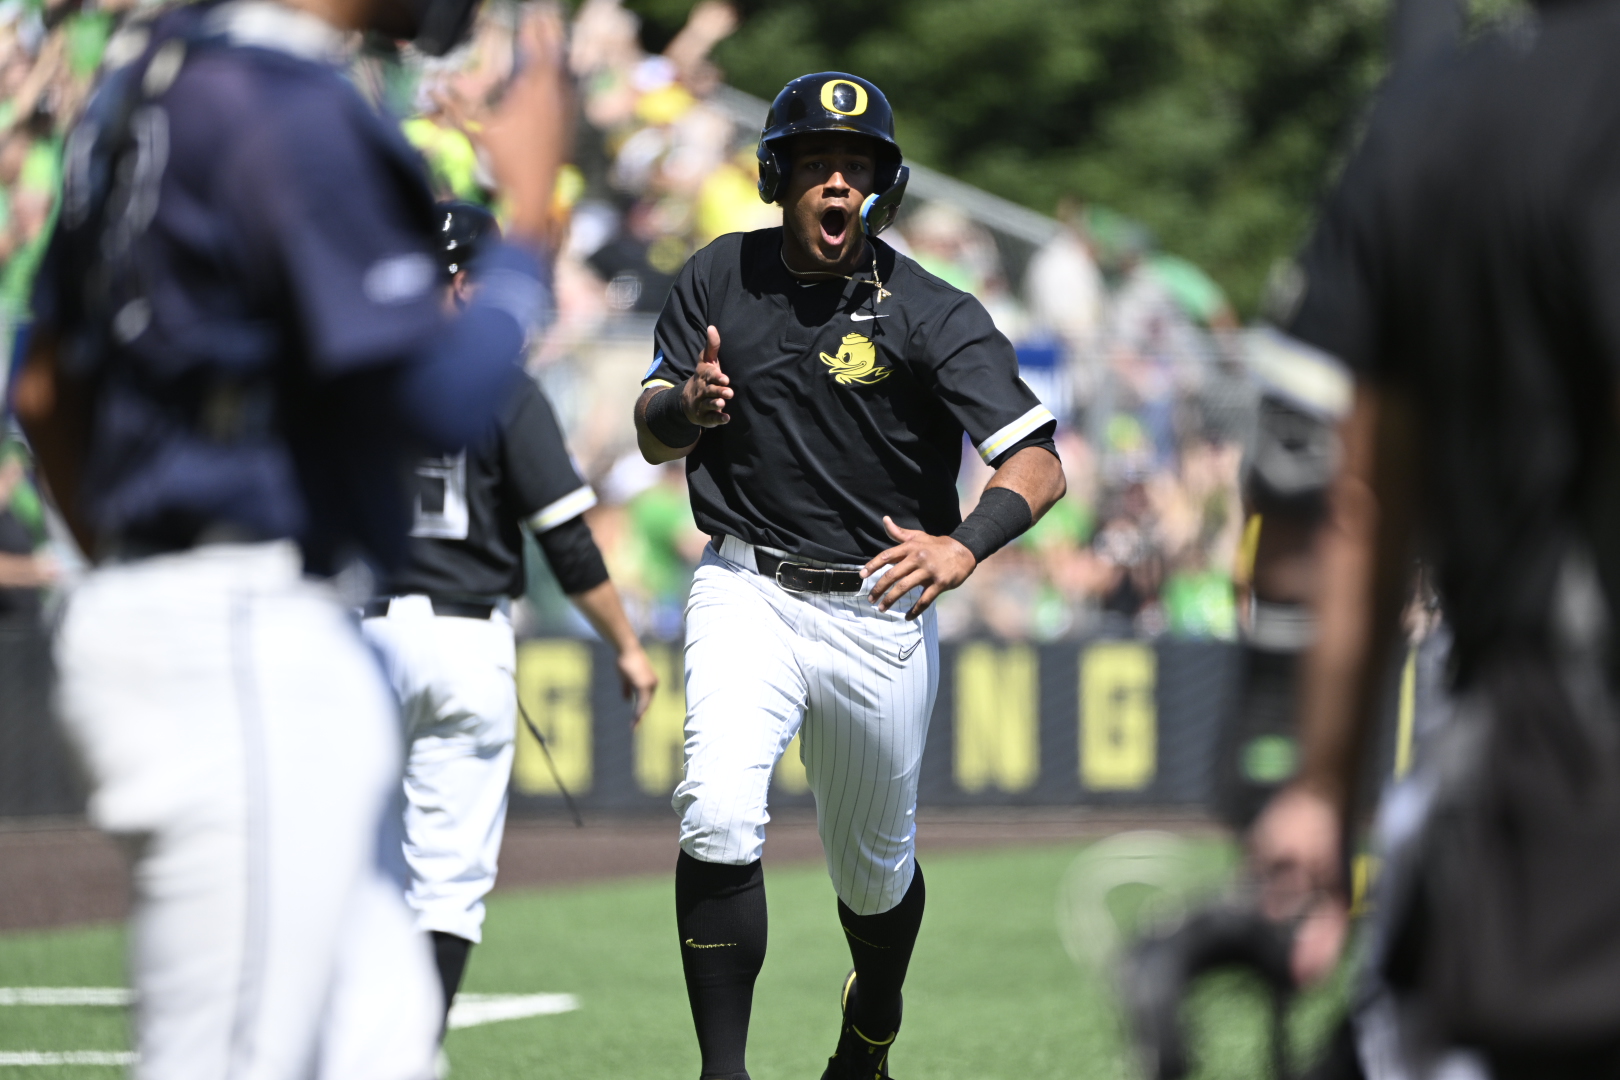 Oregon Duck Baseball on X: 𝐆𝐨𝐨𝐝 𝐕𝐢𝐛𝐞𝐬 Smitty goes yard